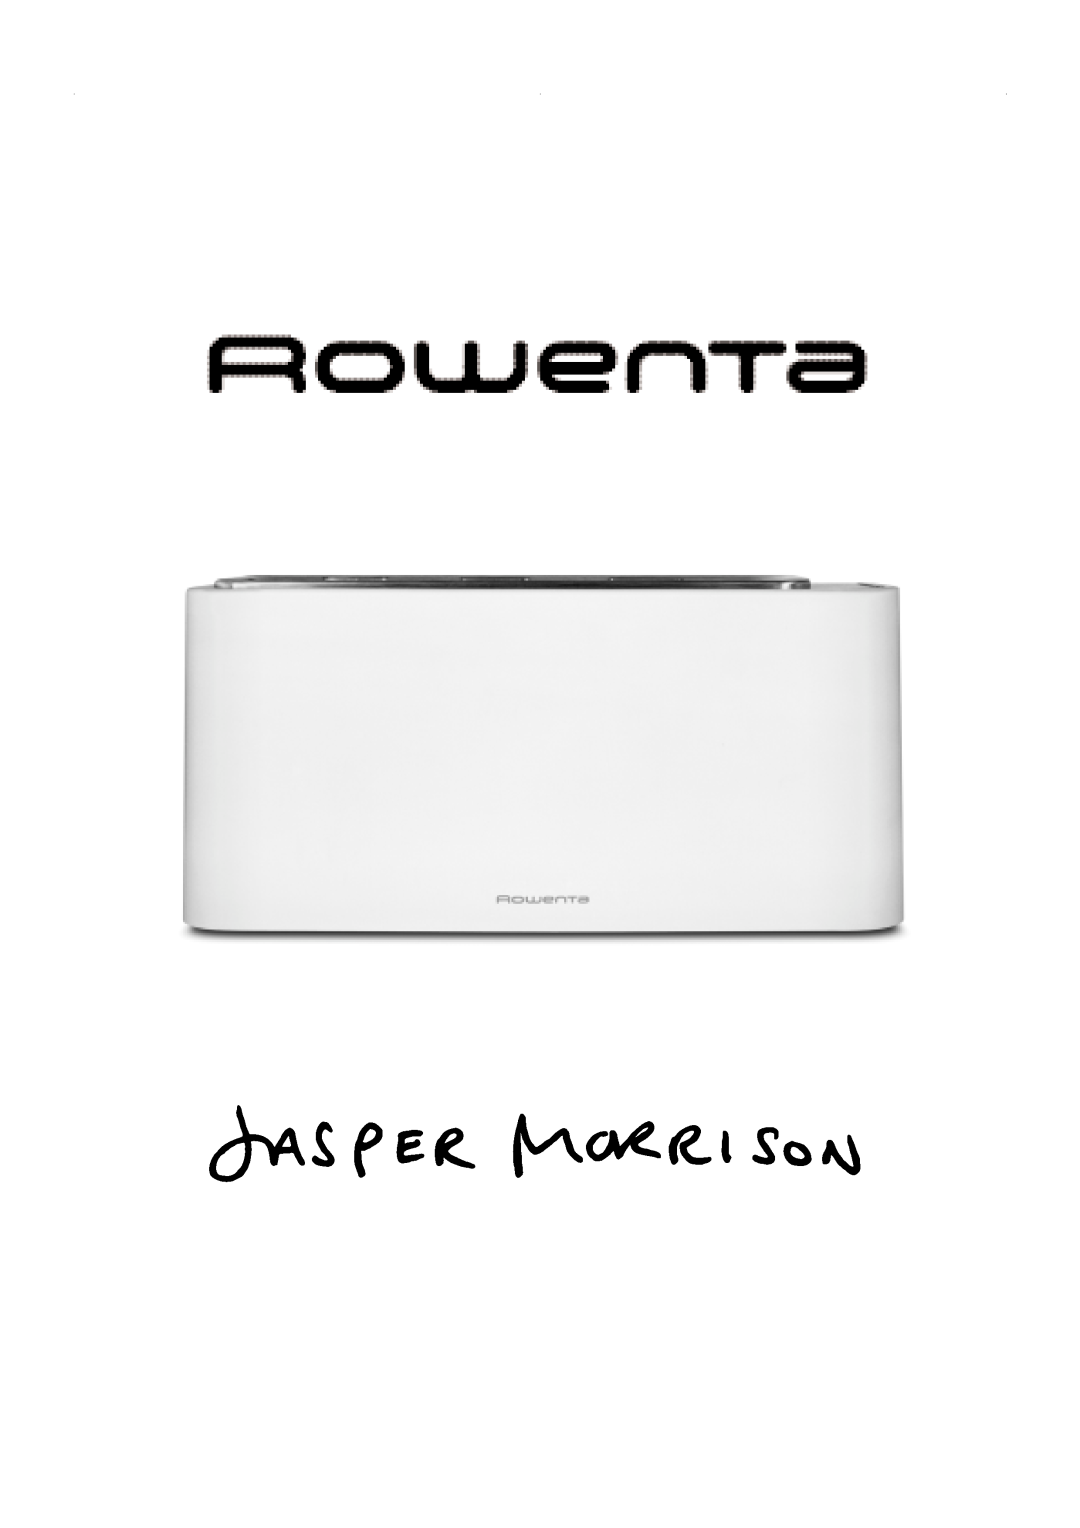 Rowenta Toaster manual 